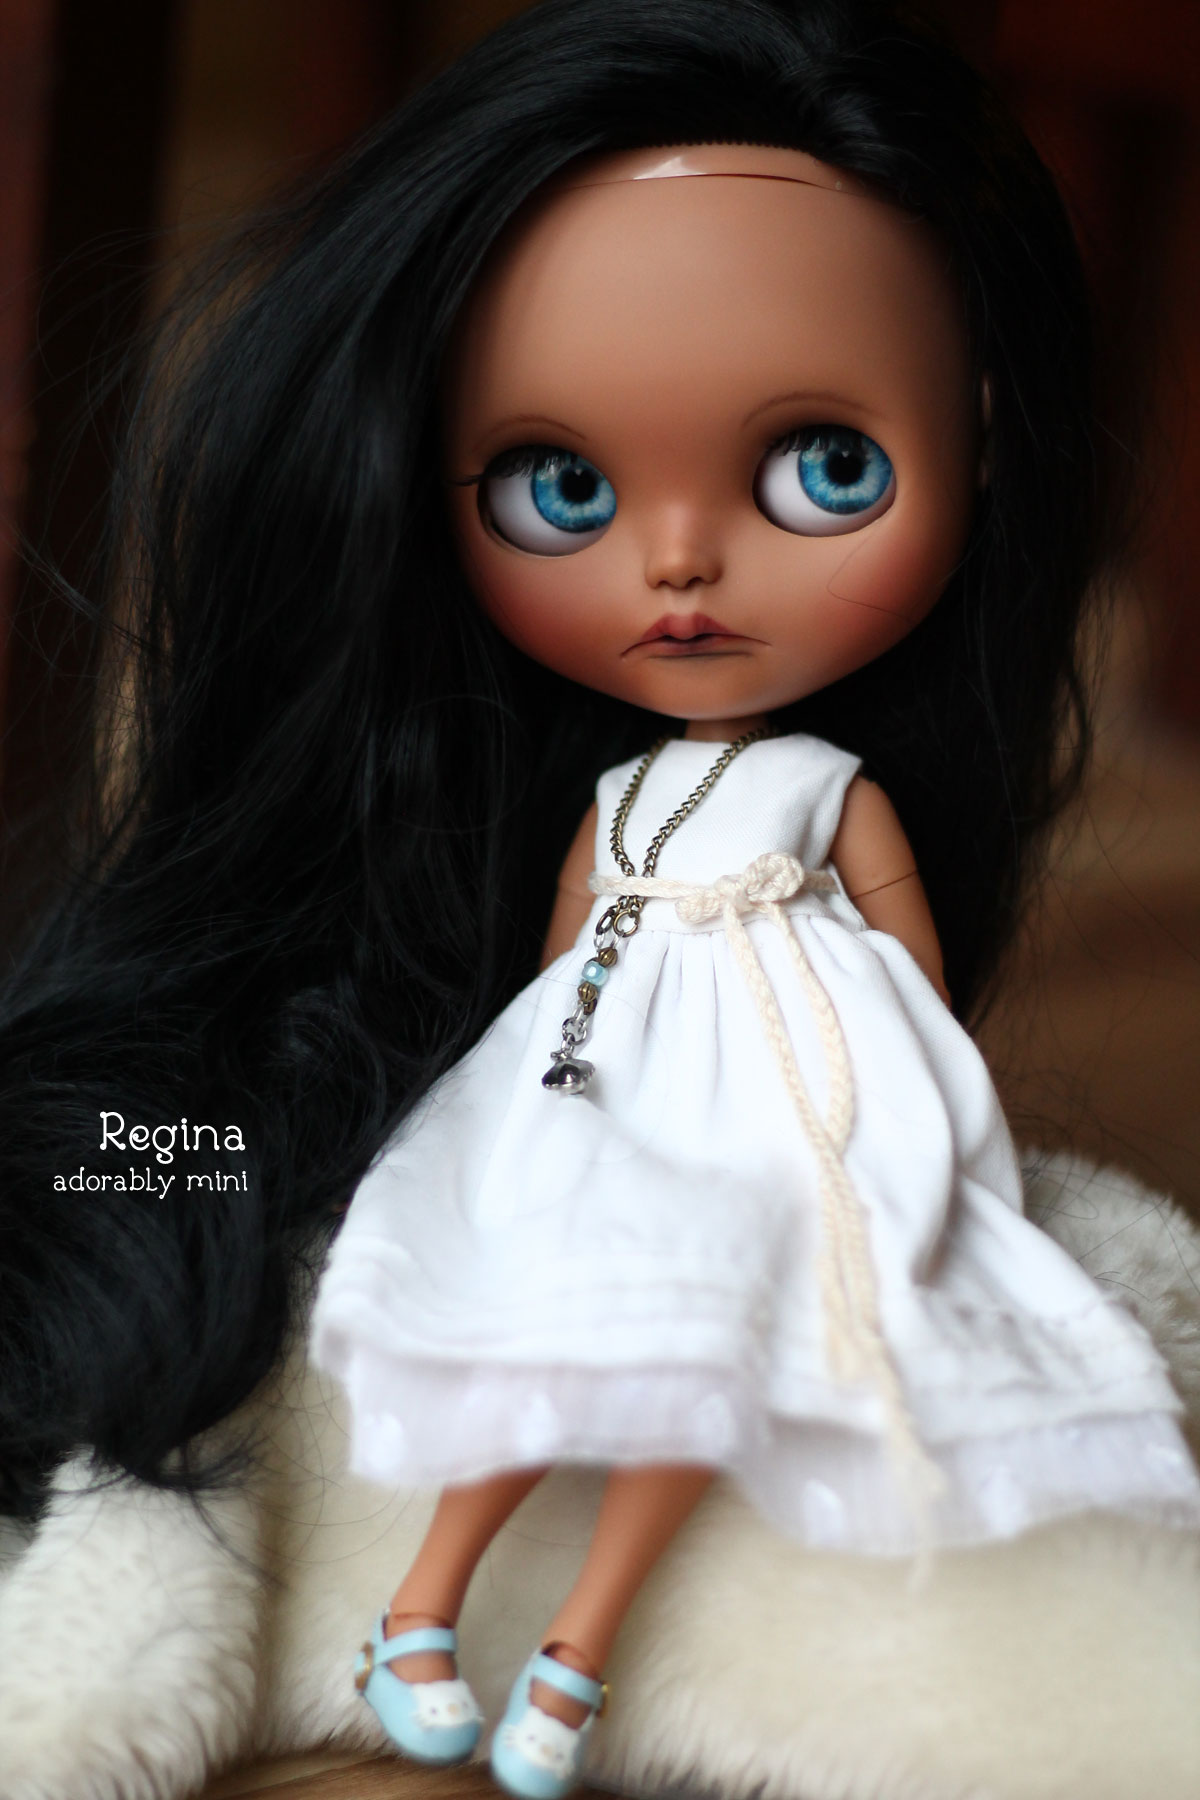 Blythe Dolls For Sale #33: Regina | AdorablyMini